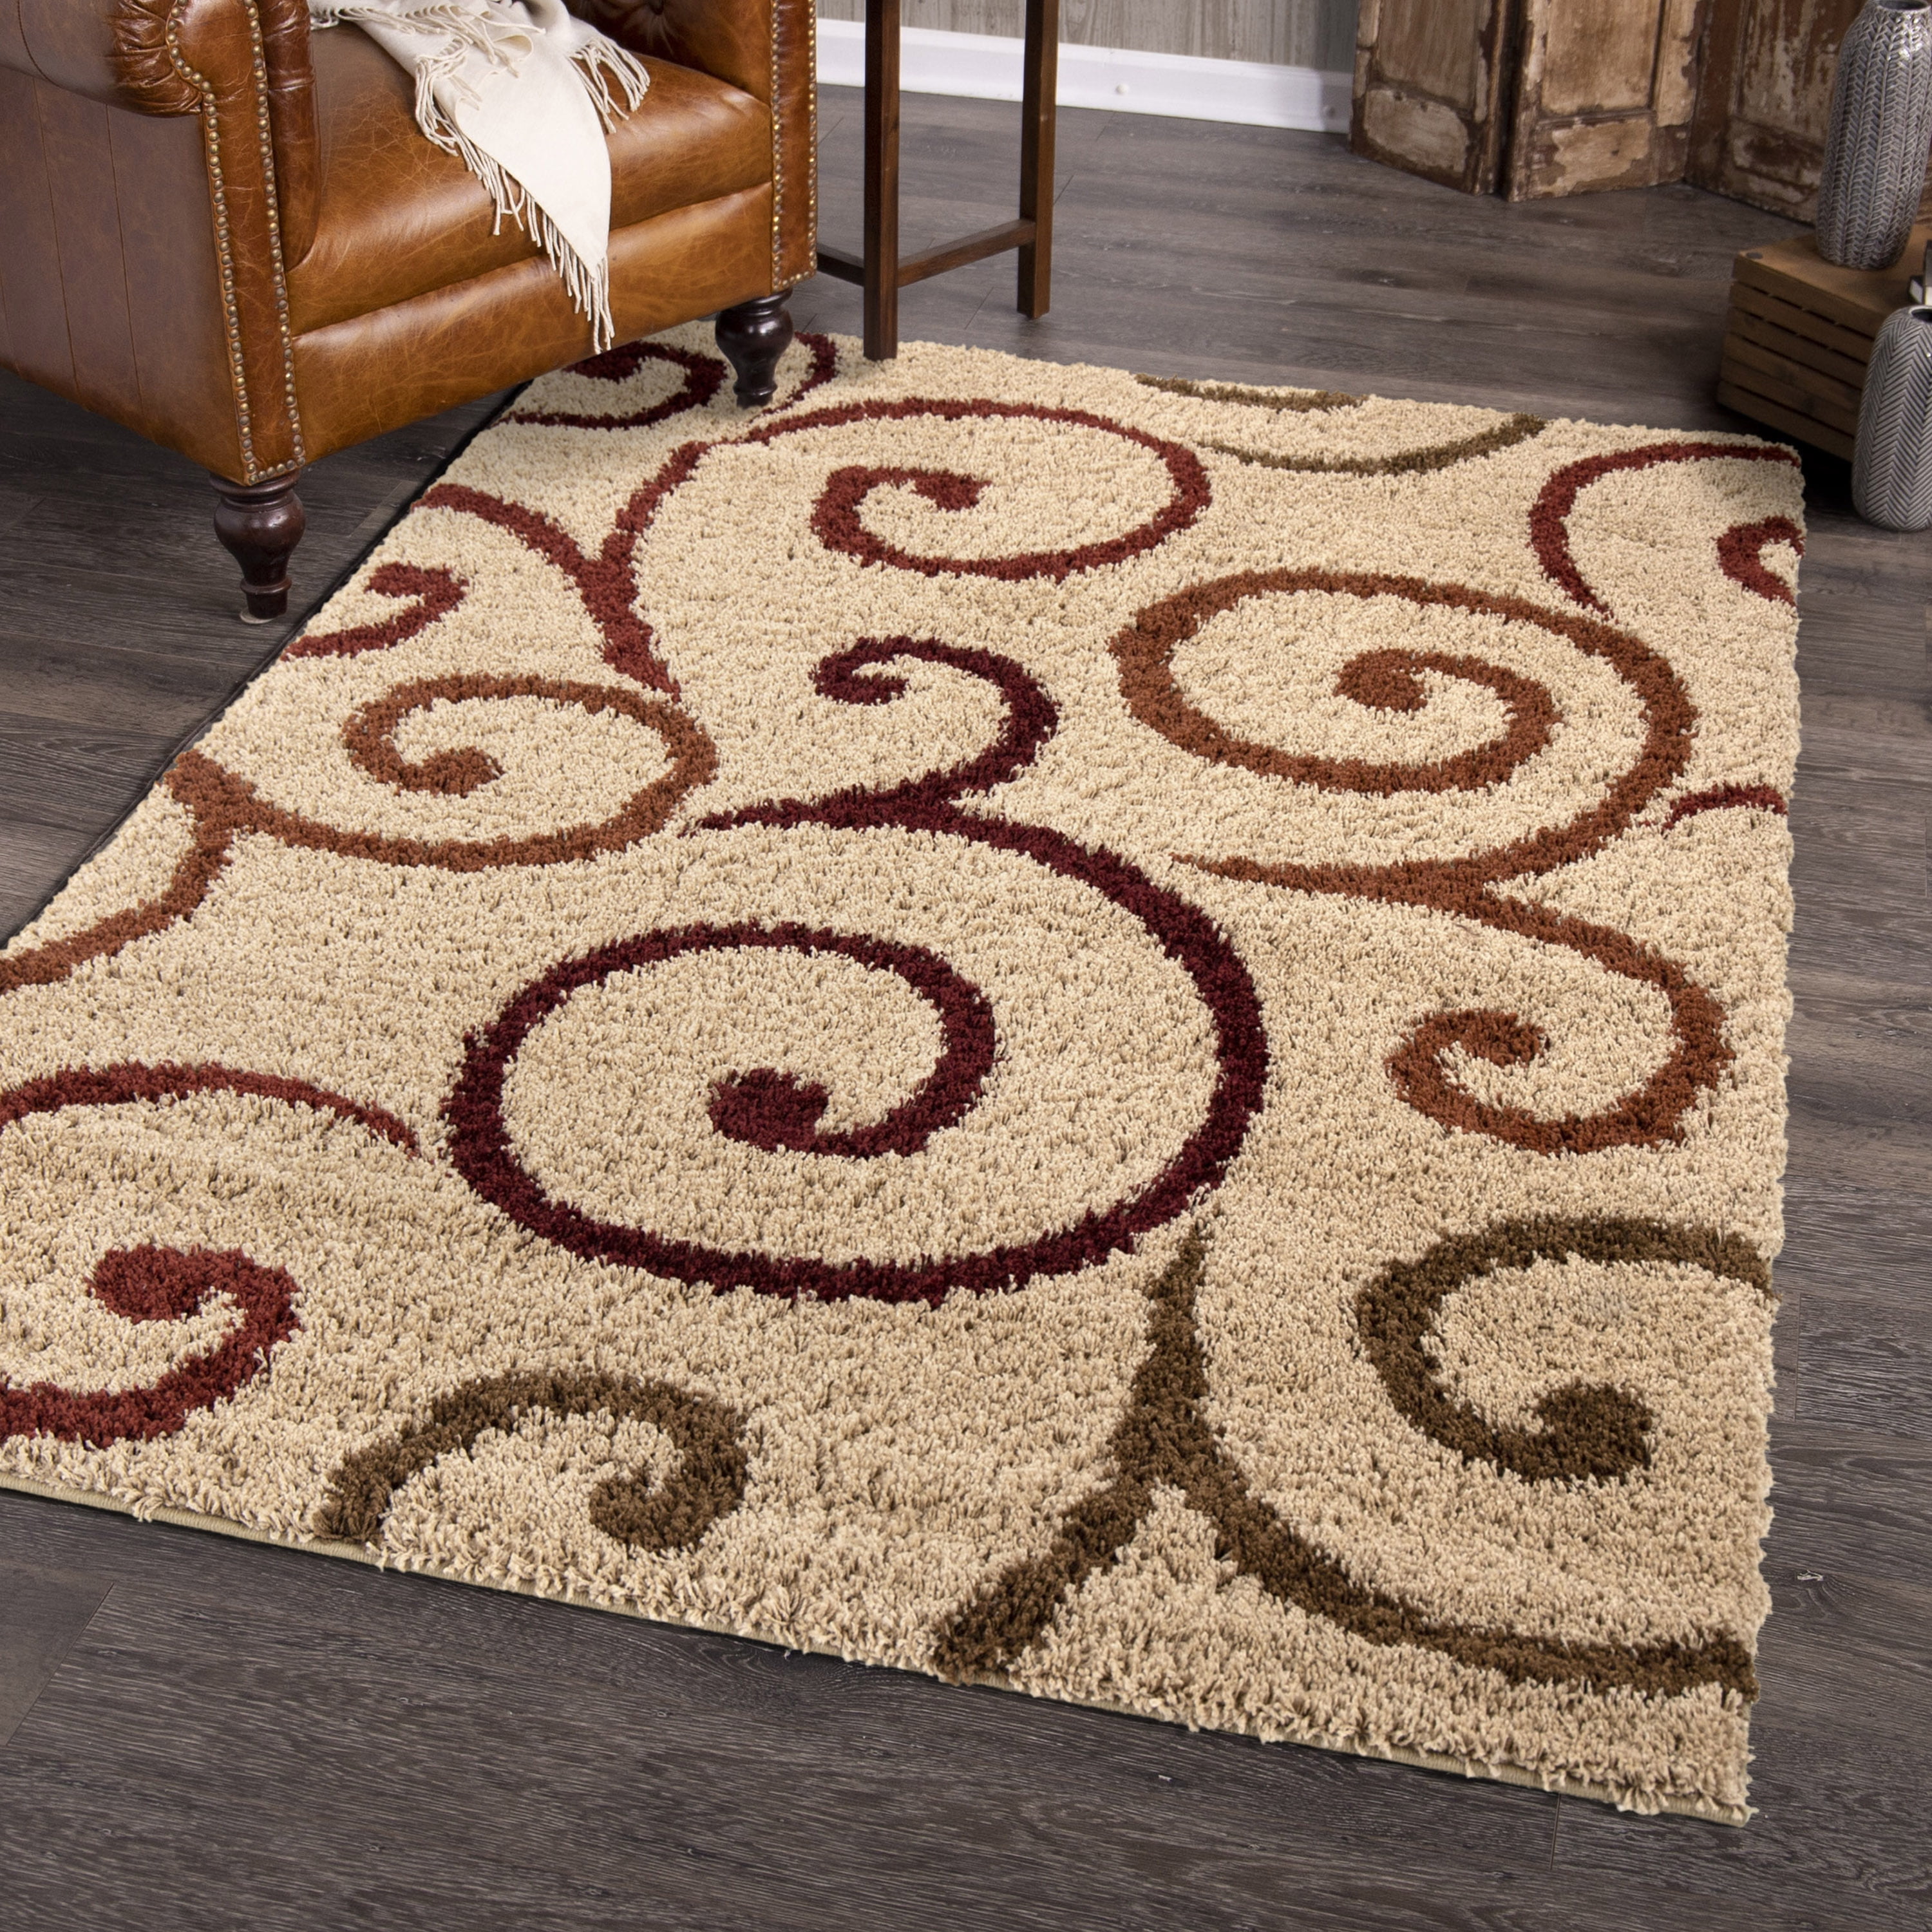 Modern Brown Rug Beige Pattern Living Room Carpet Bricks Stone Wall Small Extra 